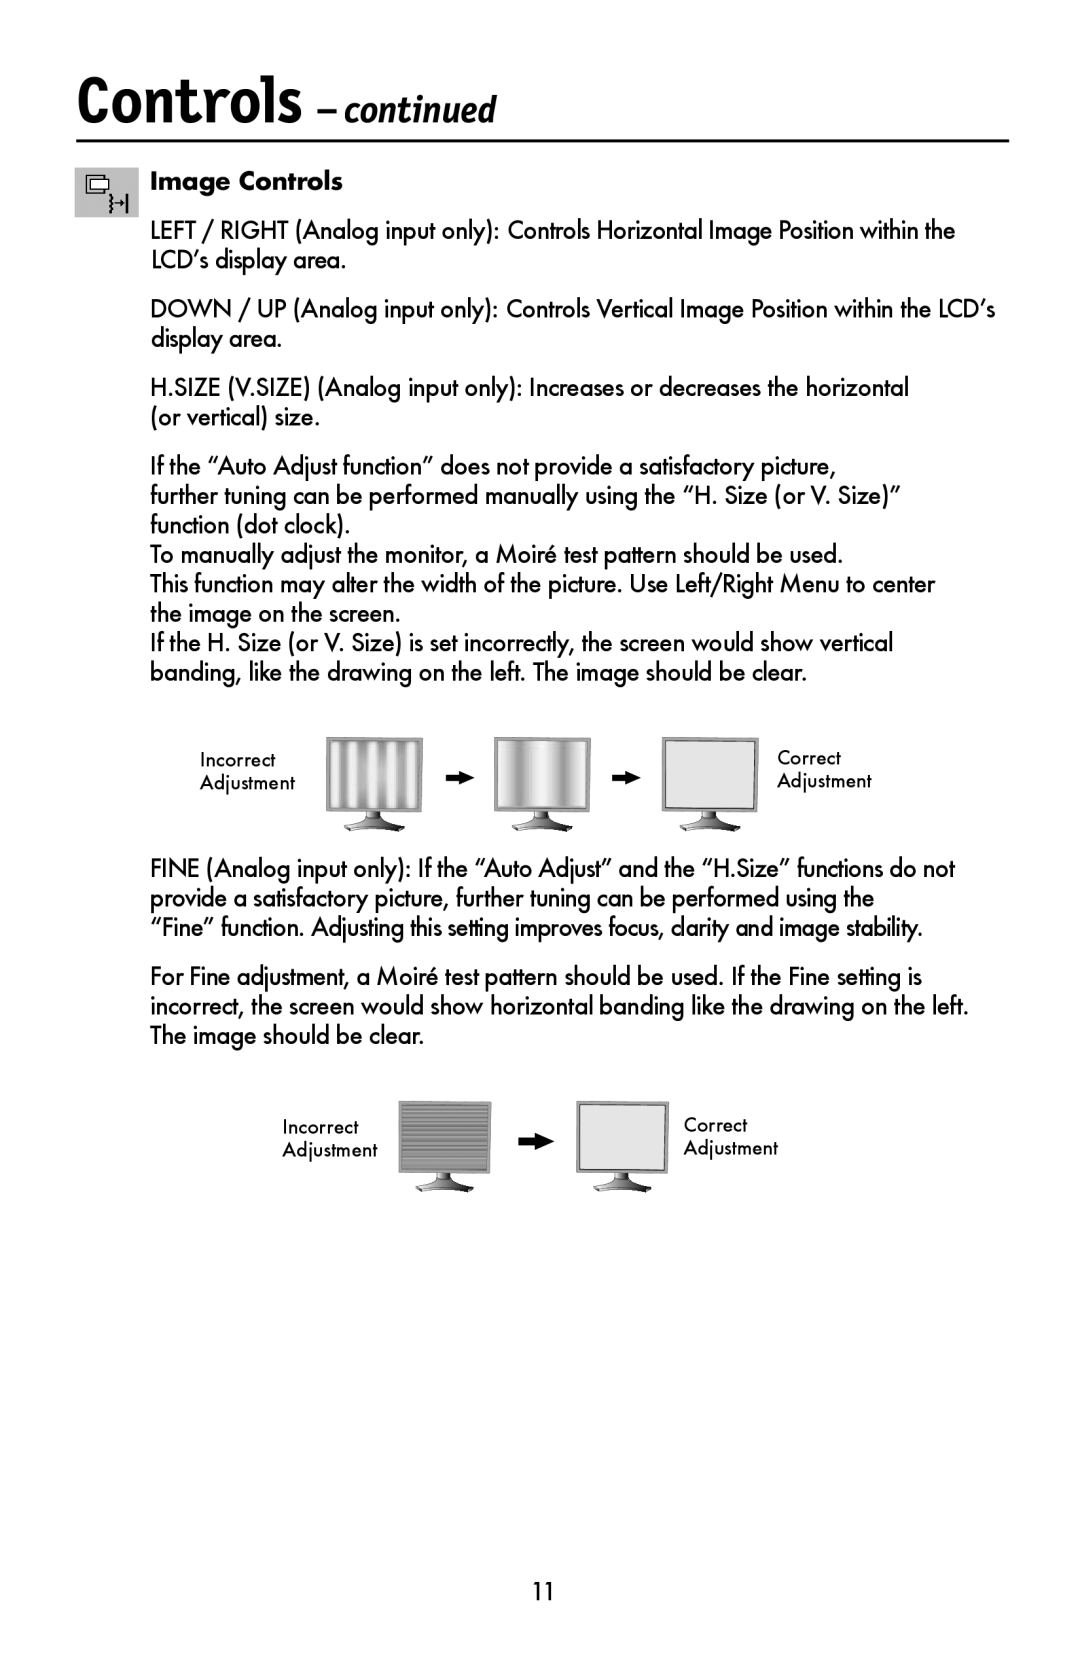 NEC LCD1990FXTM user manual Controls - continued, Image Controls 